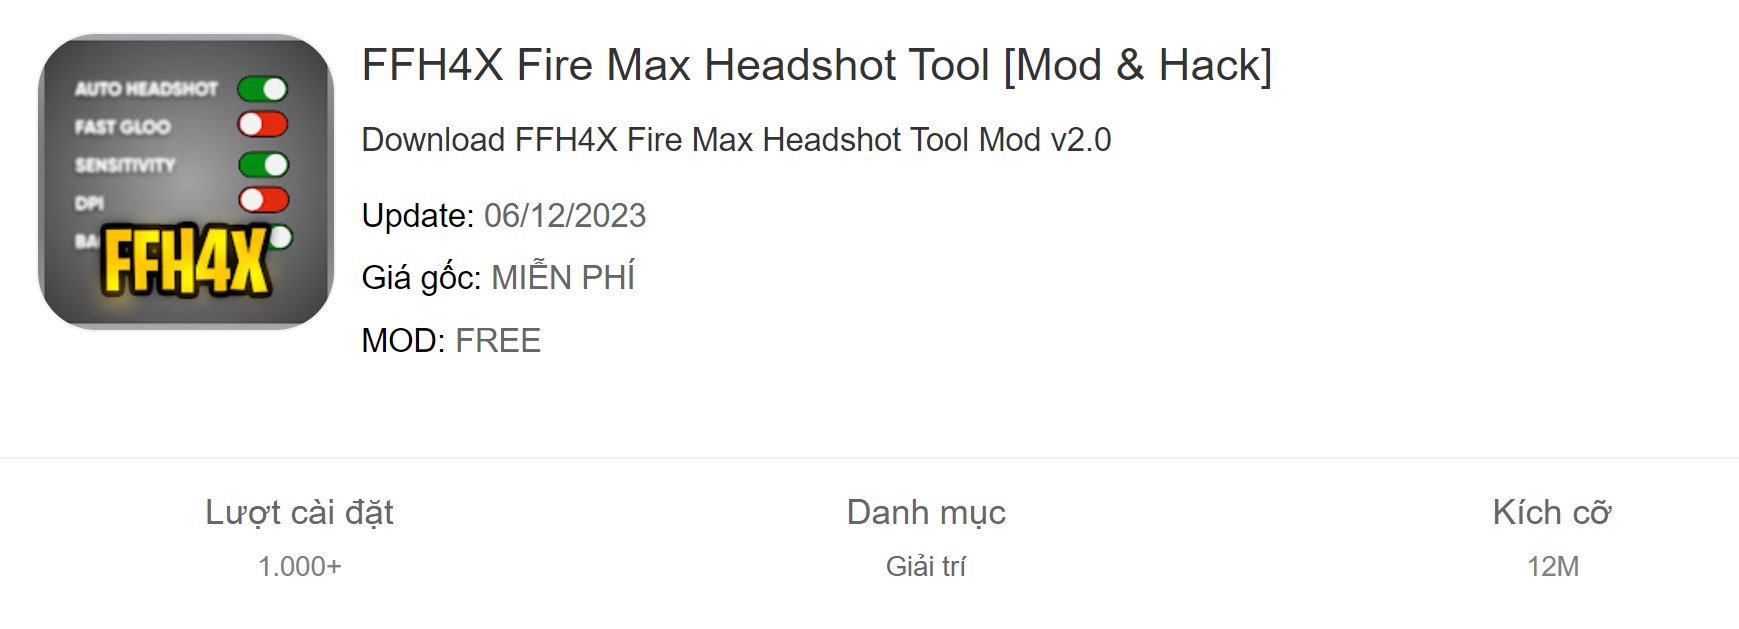 FFH4X Fire Max Headshot Tool  Mod v2.0